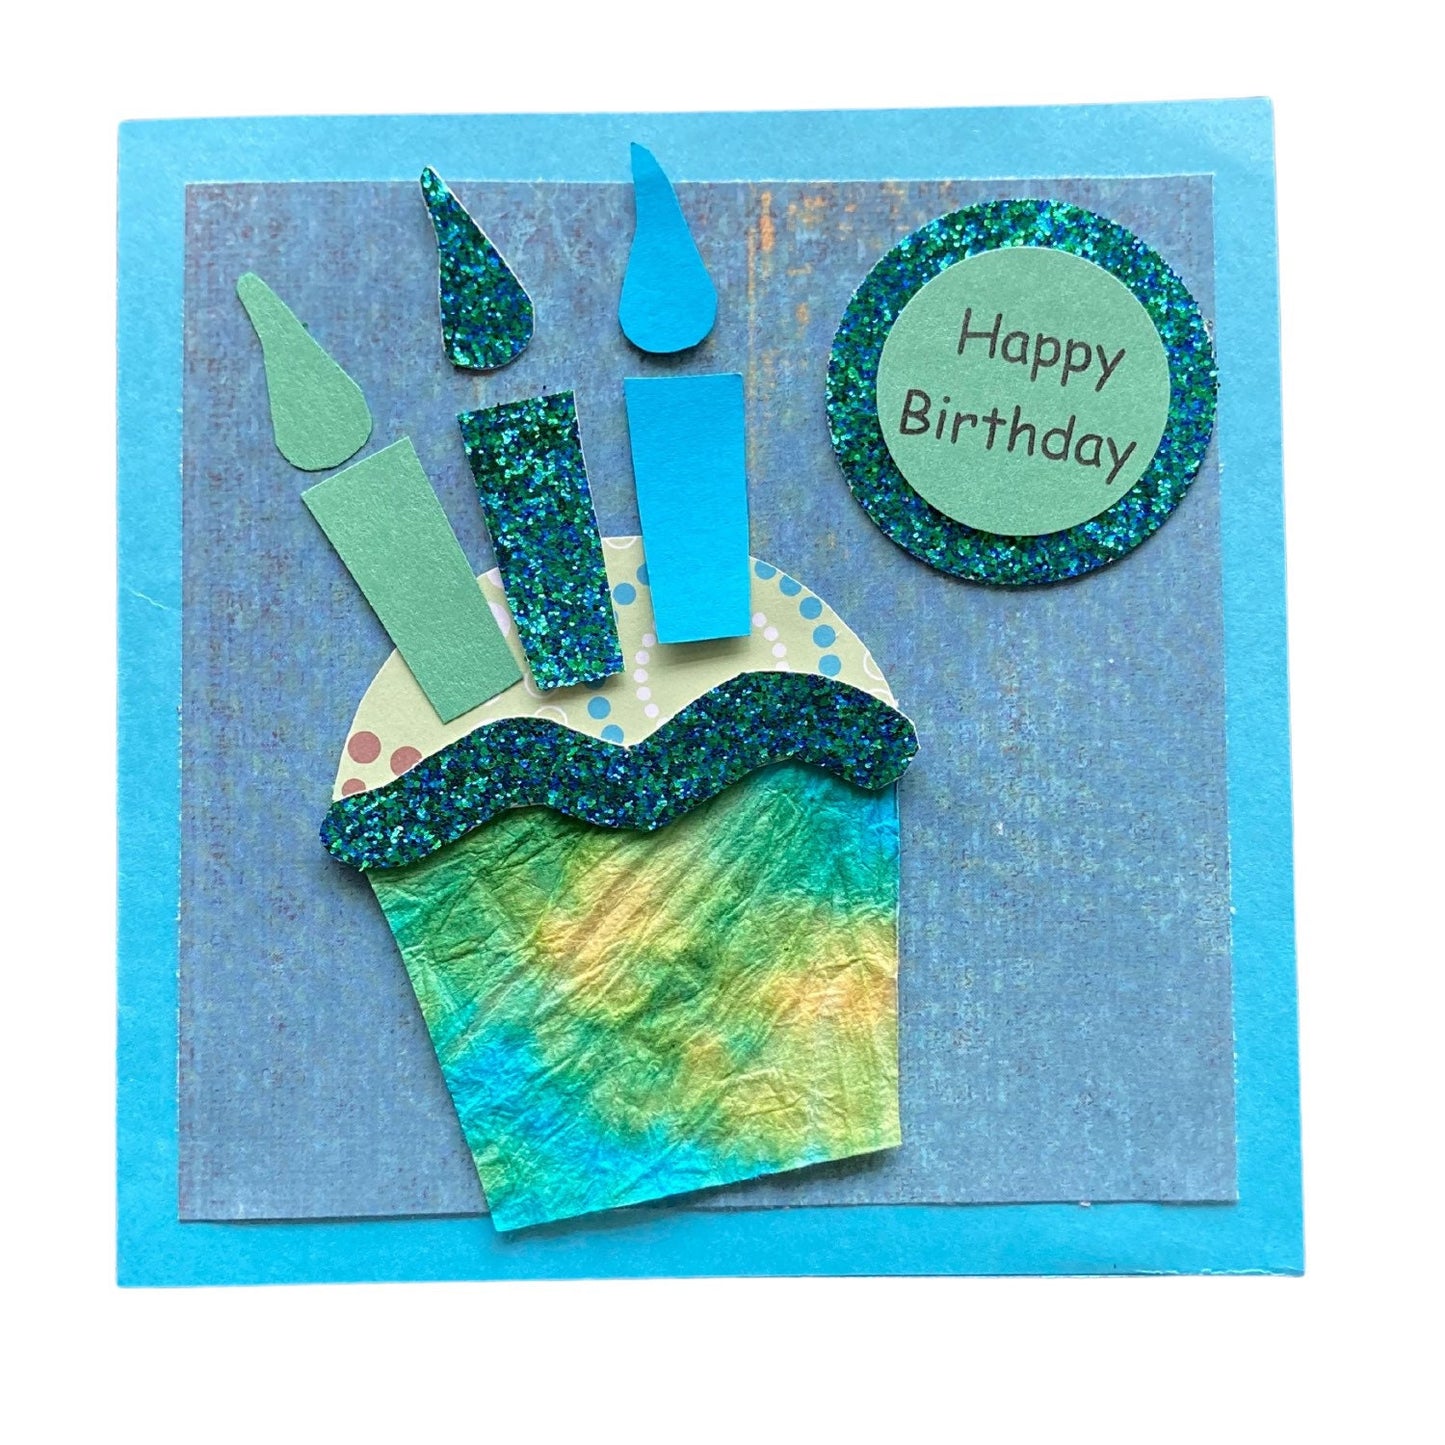 Handmade Cupcake Birthday Card